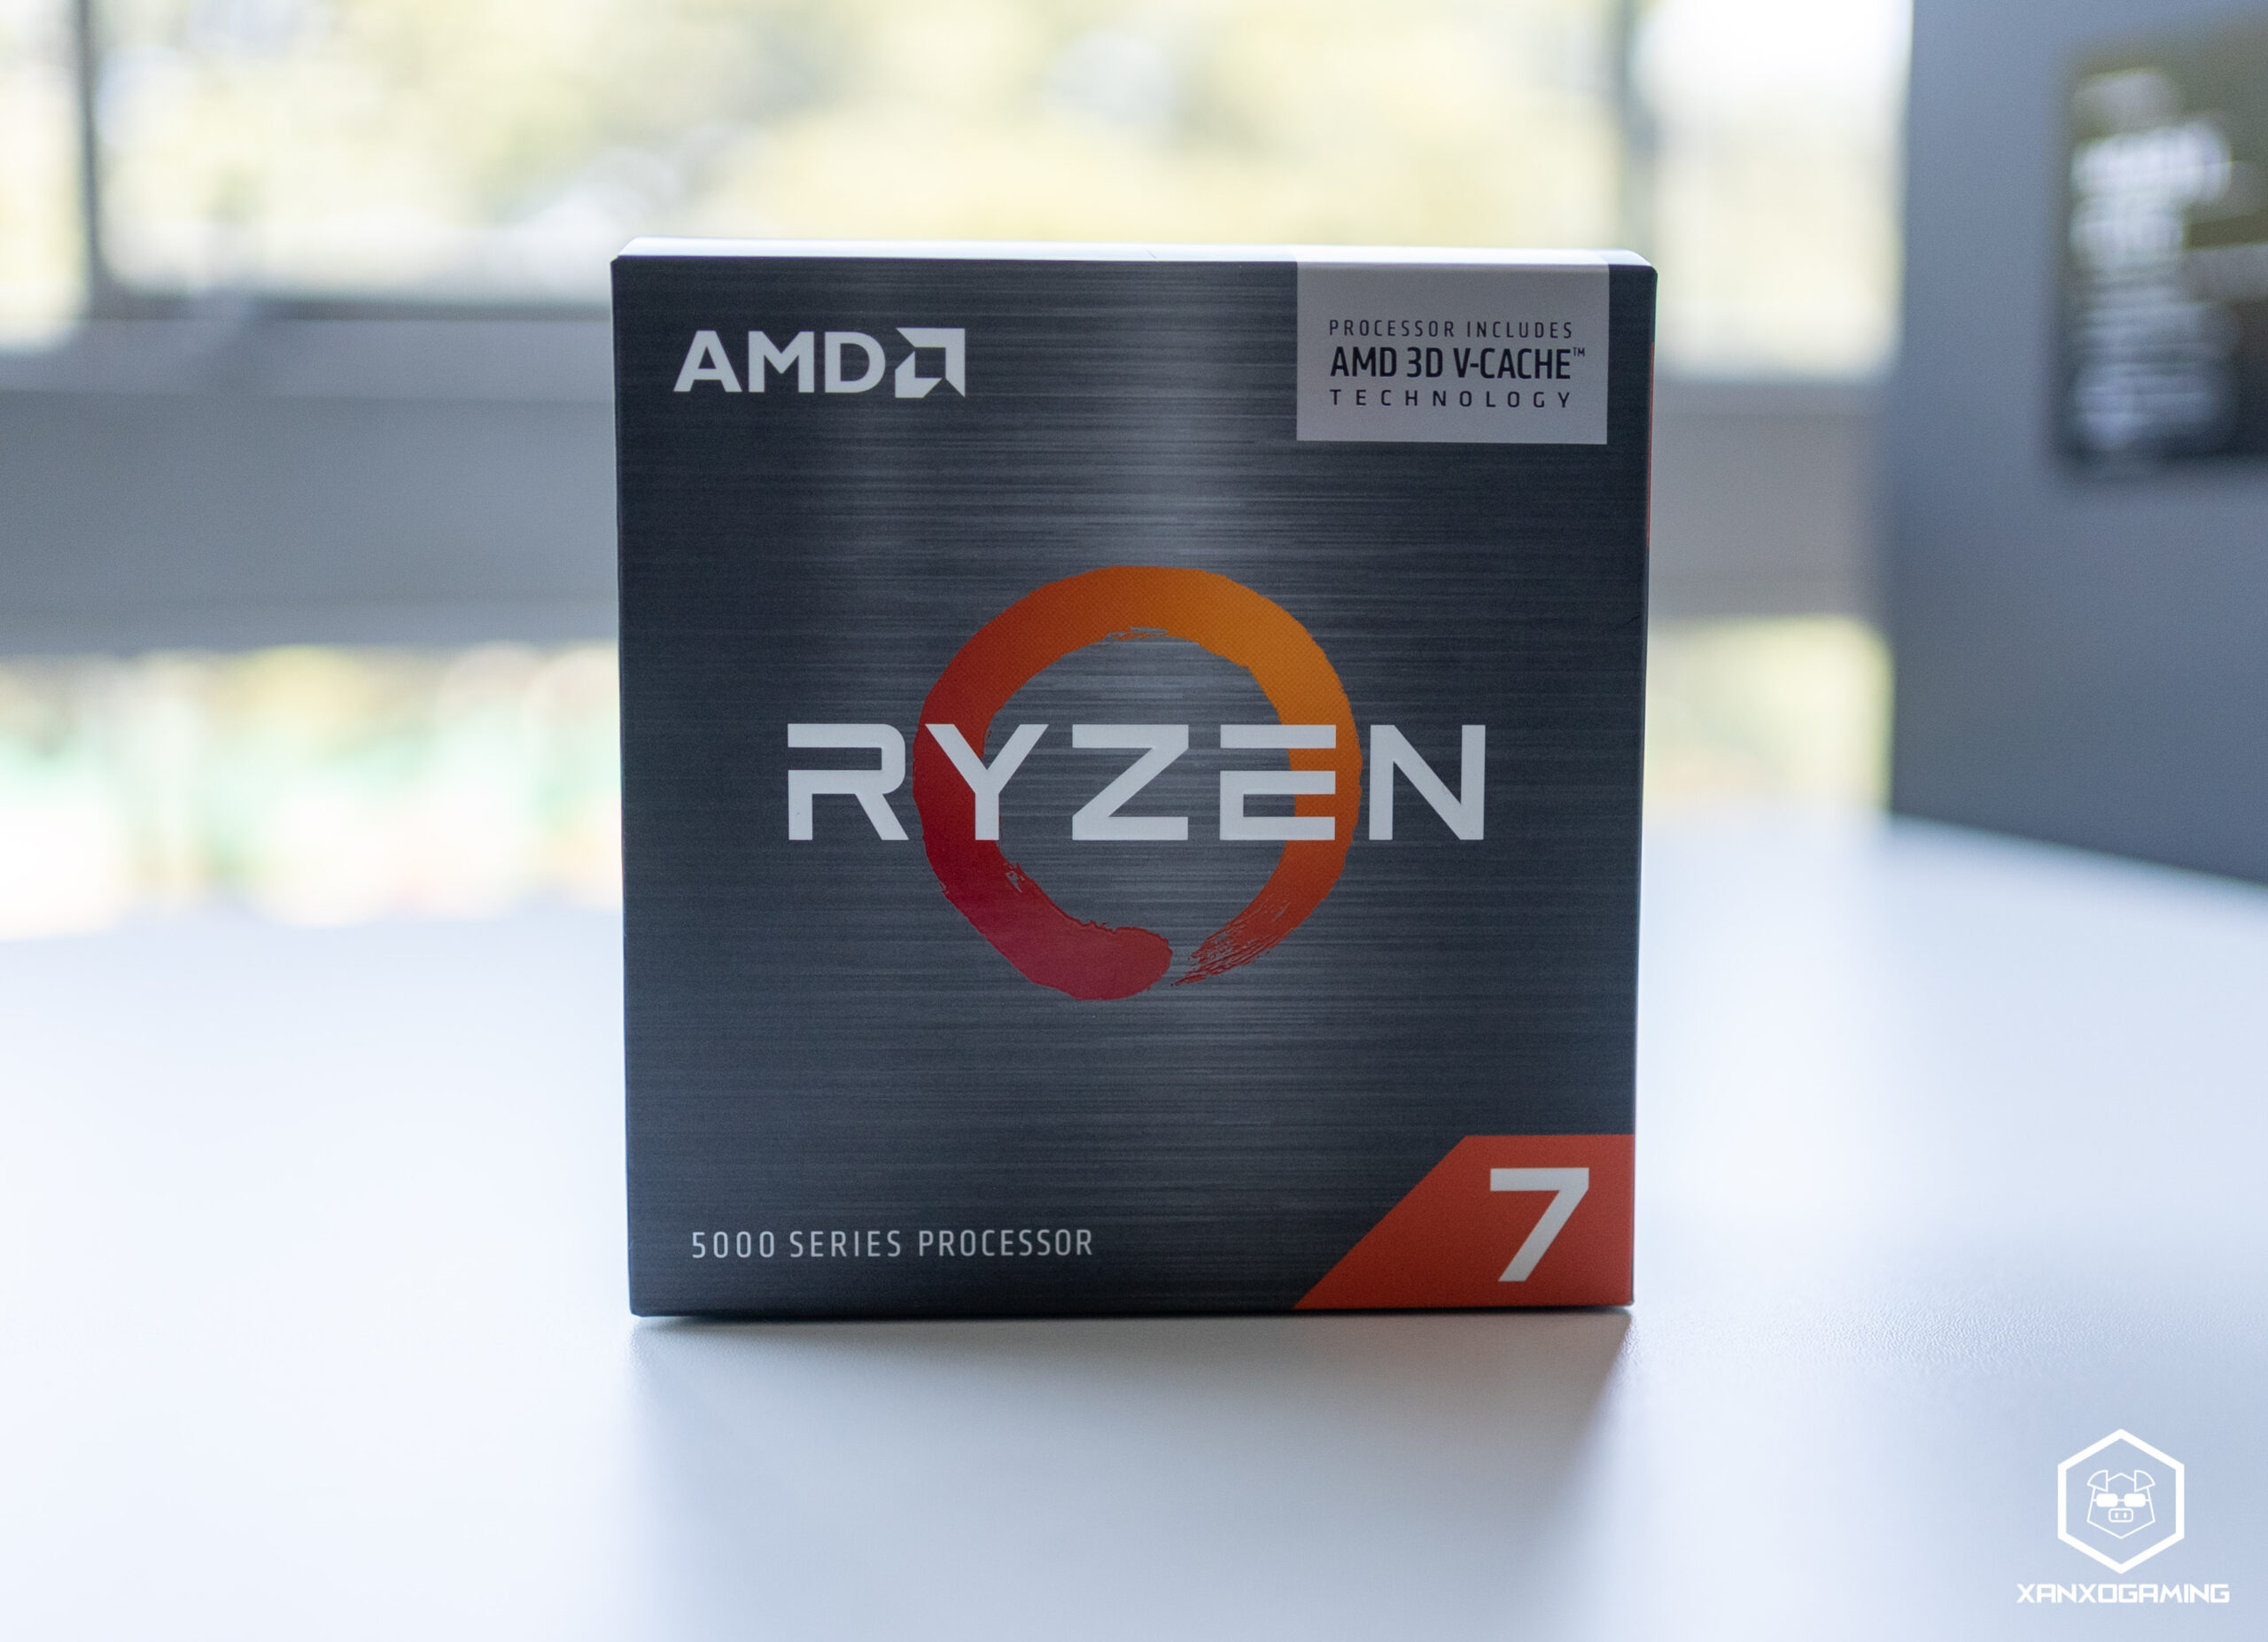 AMD Ryzen 7 5800X3D outclasses the Intel Core i9-12900K in gaming